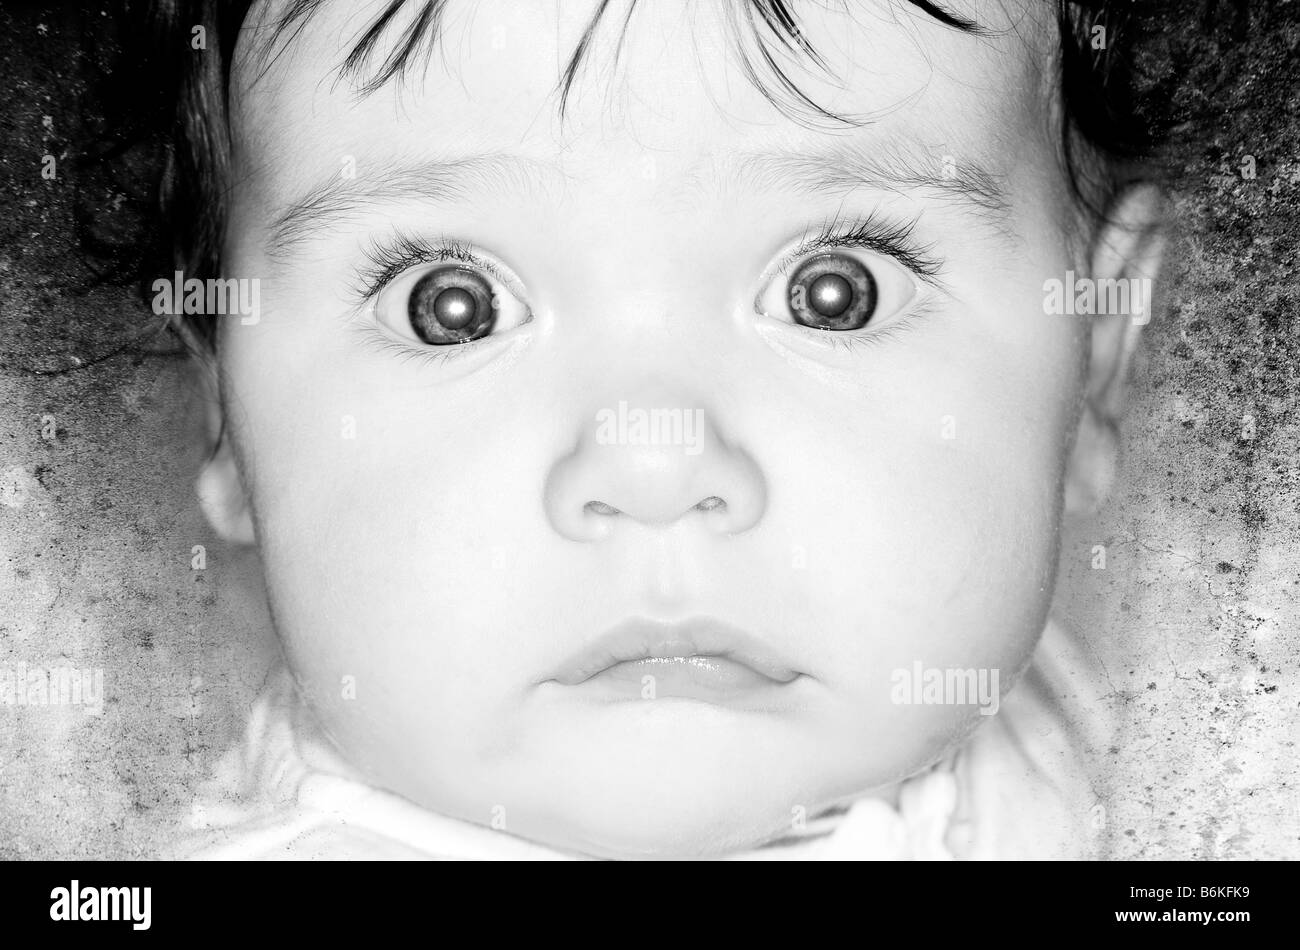 baby face angelic Stock Photo